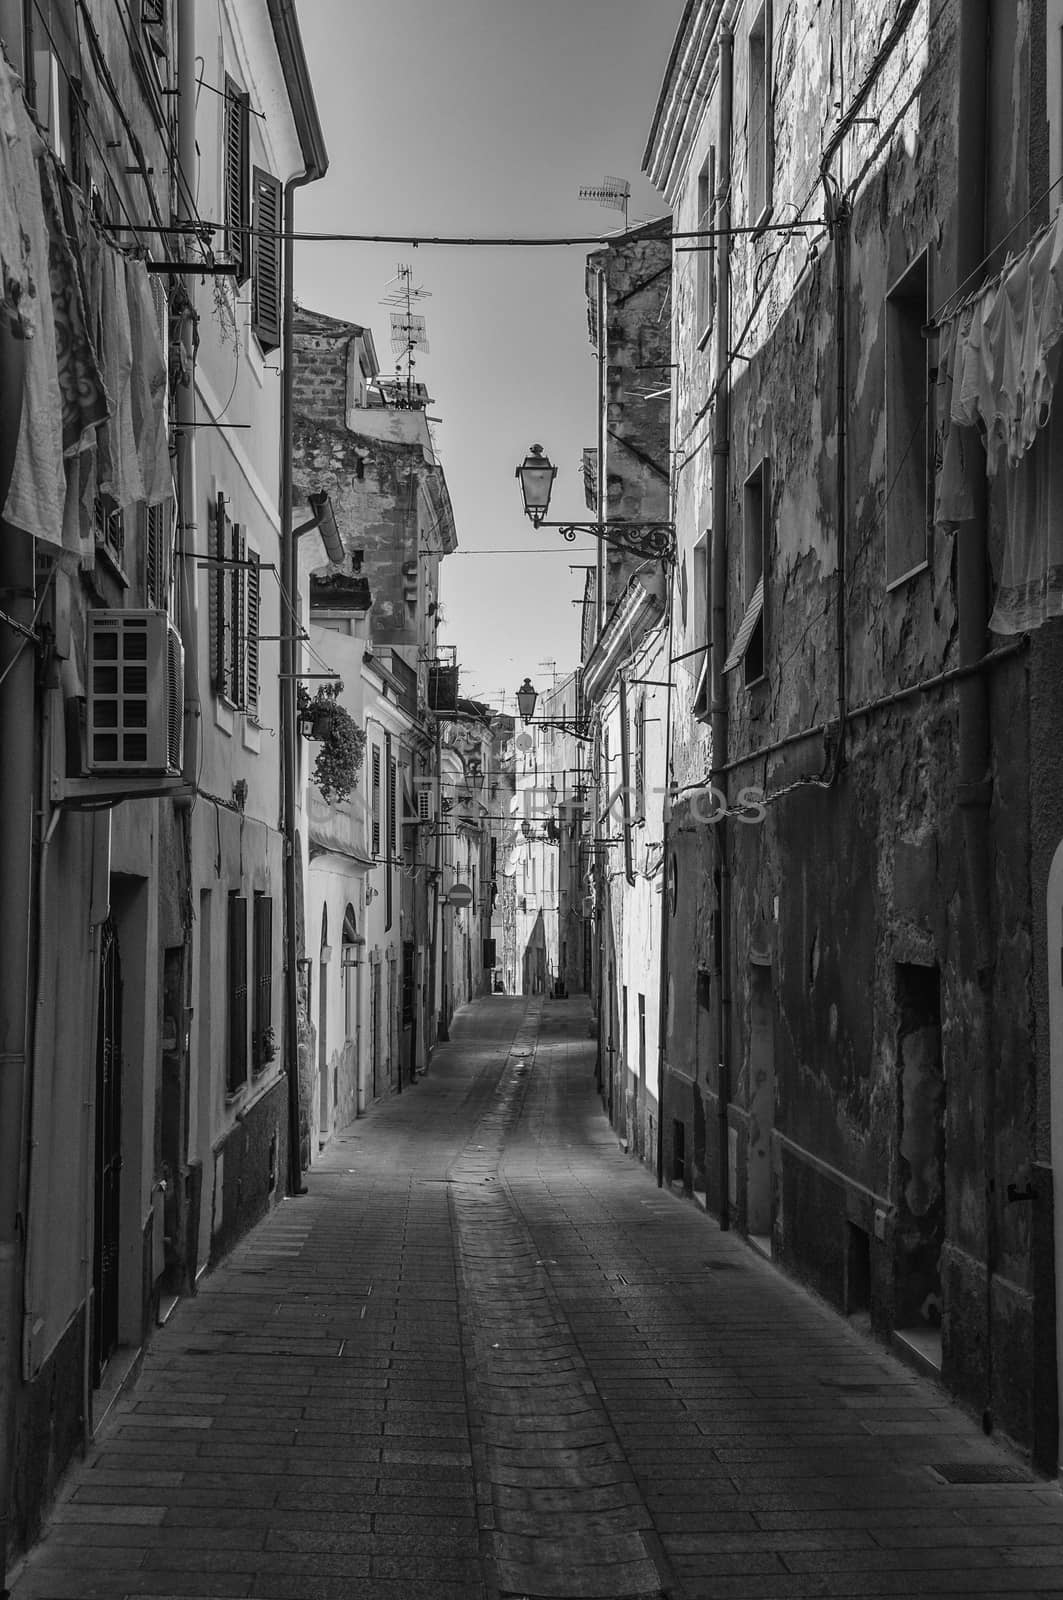 Alley in old italian city